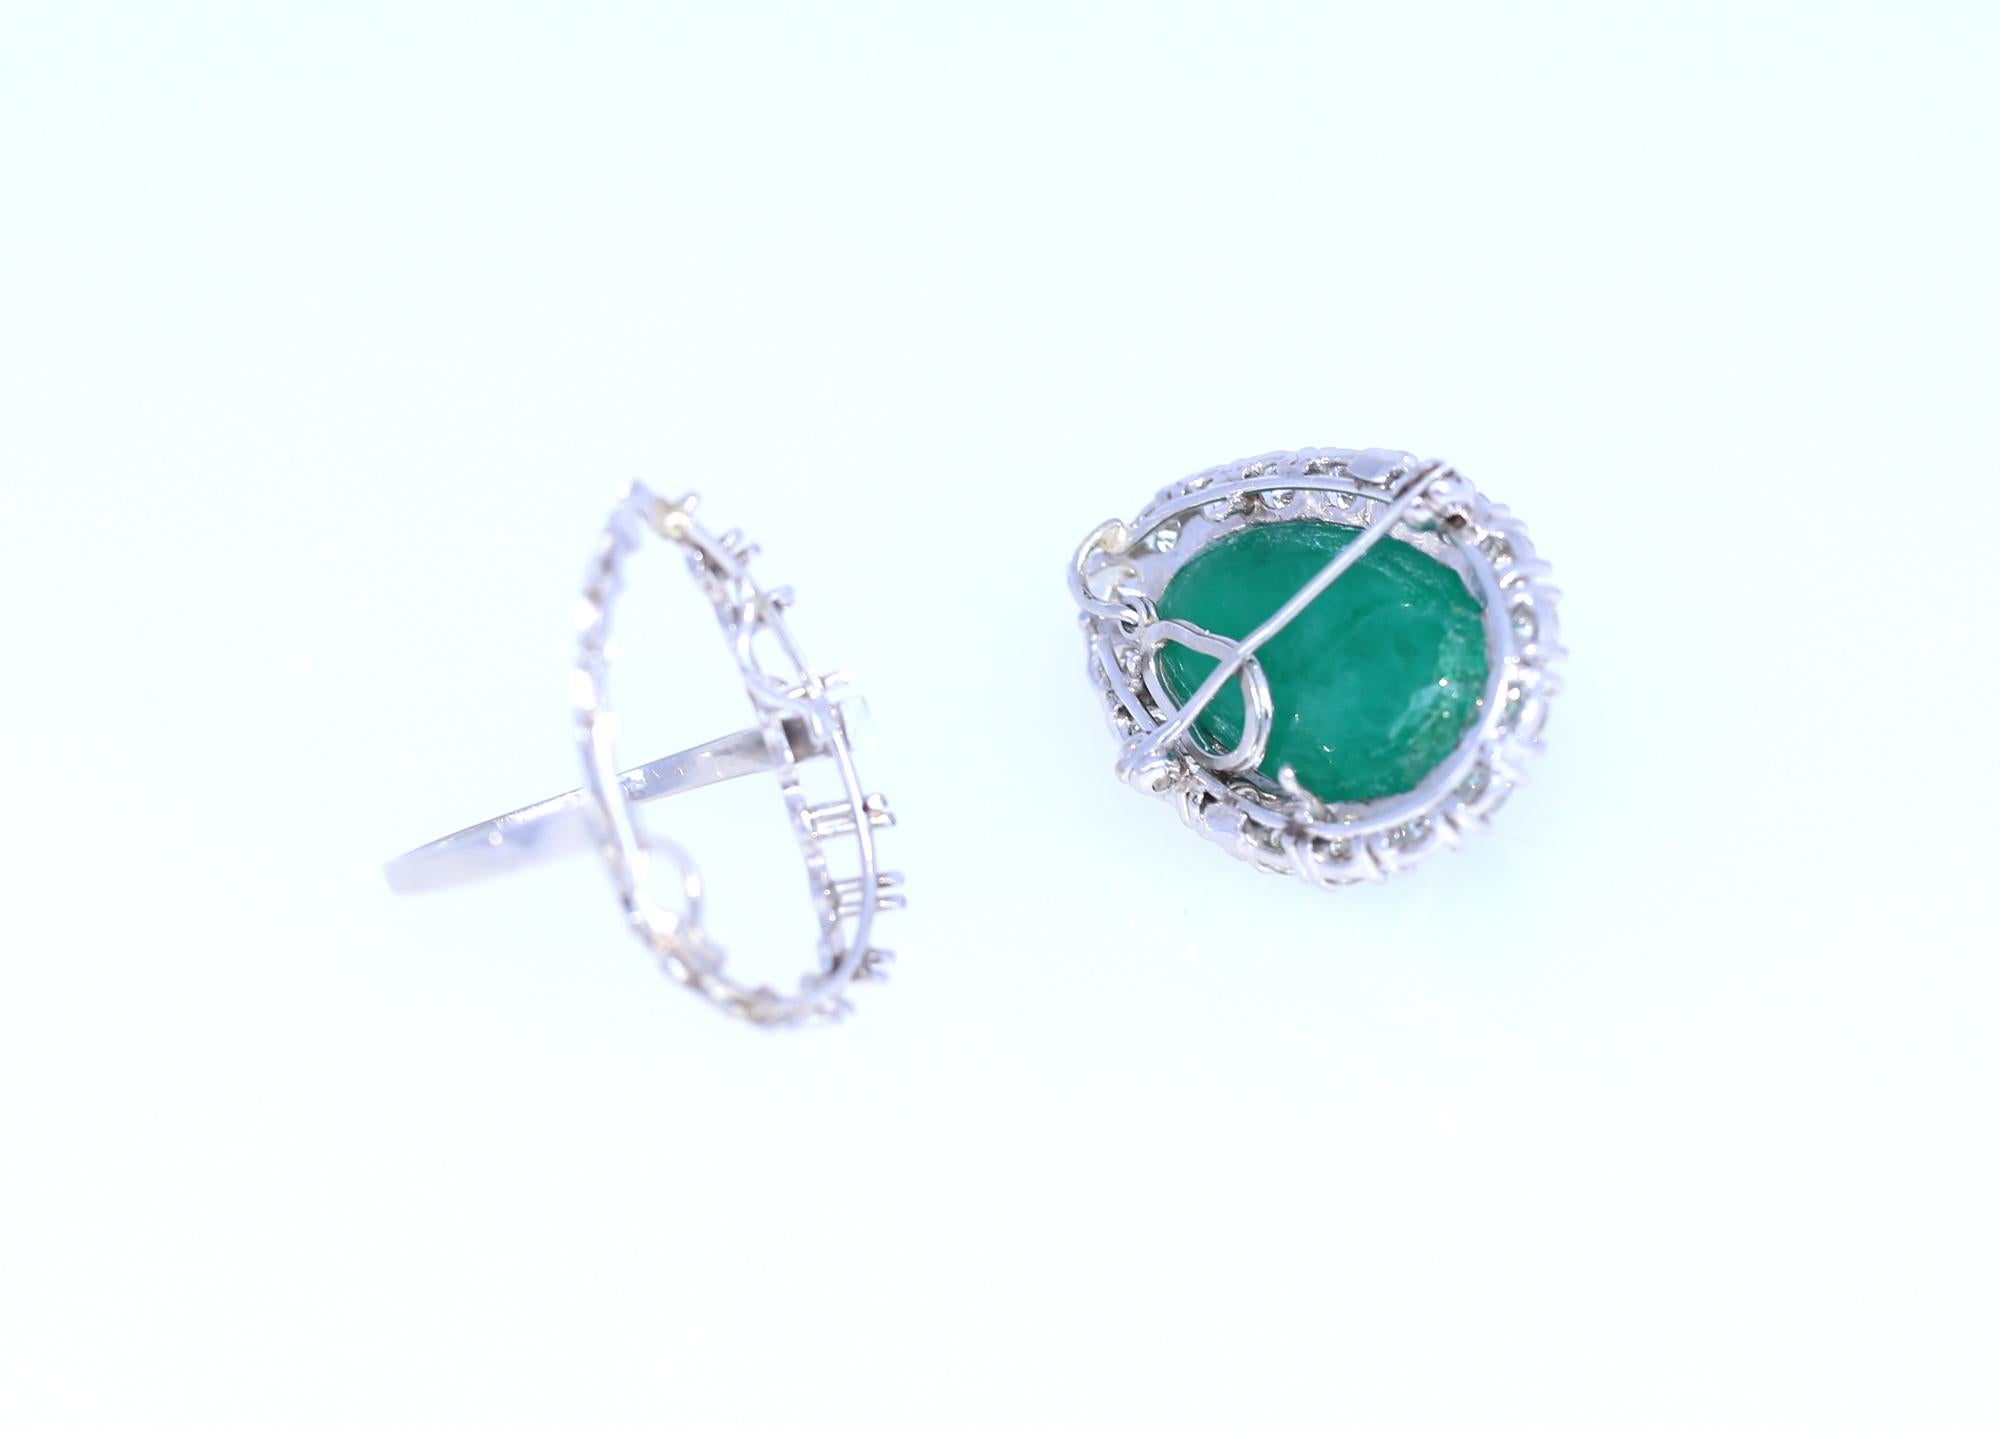 22 Carat Emerald 3 Carat Diamonds Ring Pendant Brooch Transformer Platinum, 1945 5